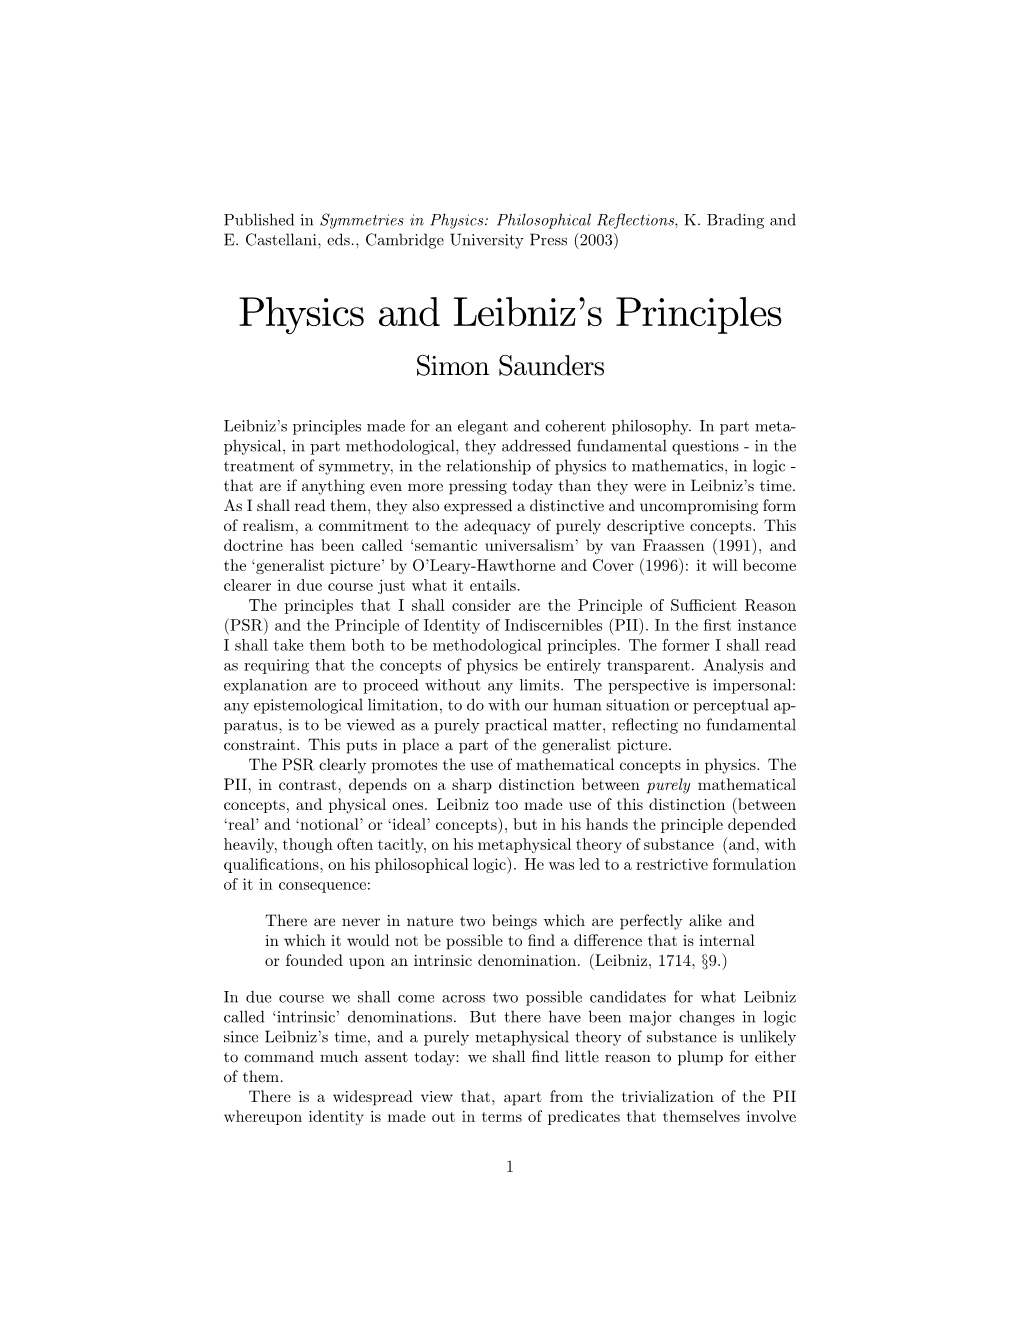 Physics and Leibniz's Principles